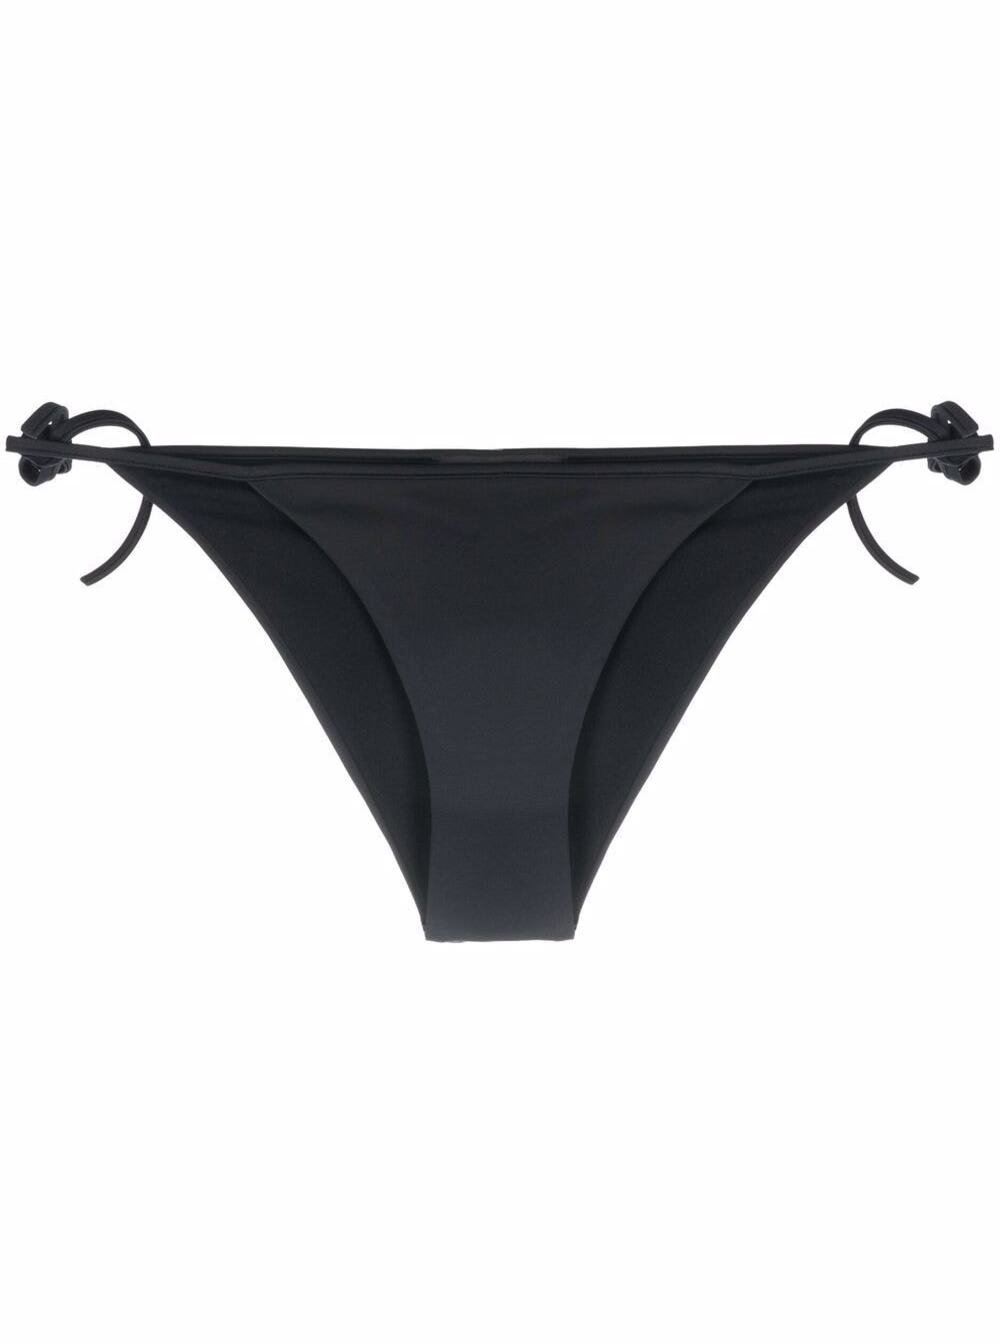 Dsquared2 D-squared2 Womans Black Stretch Fabric Bikini Bottoms